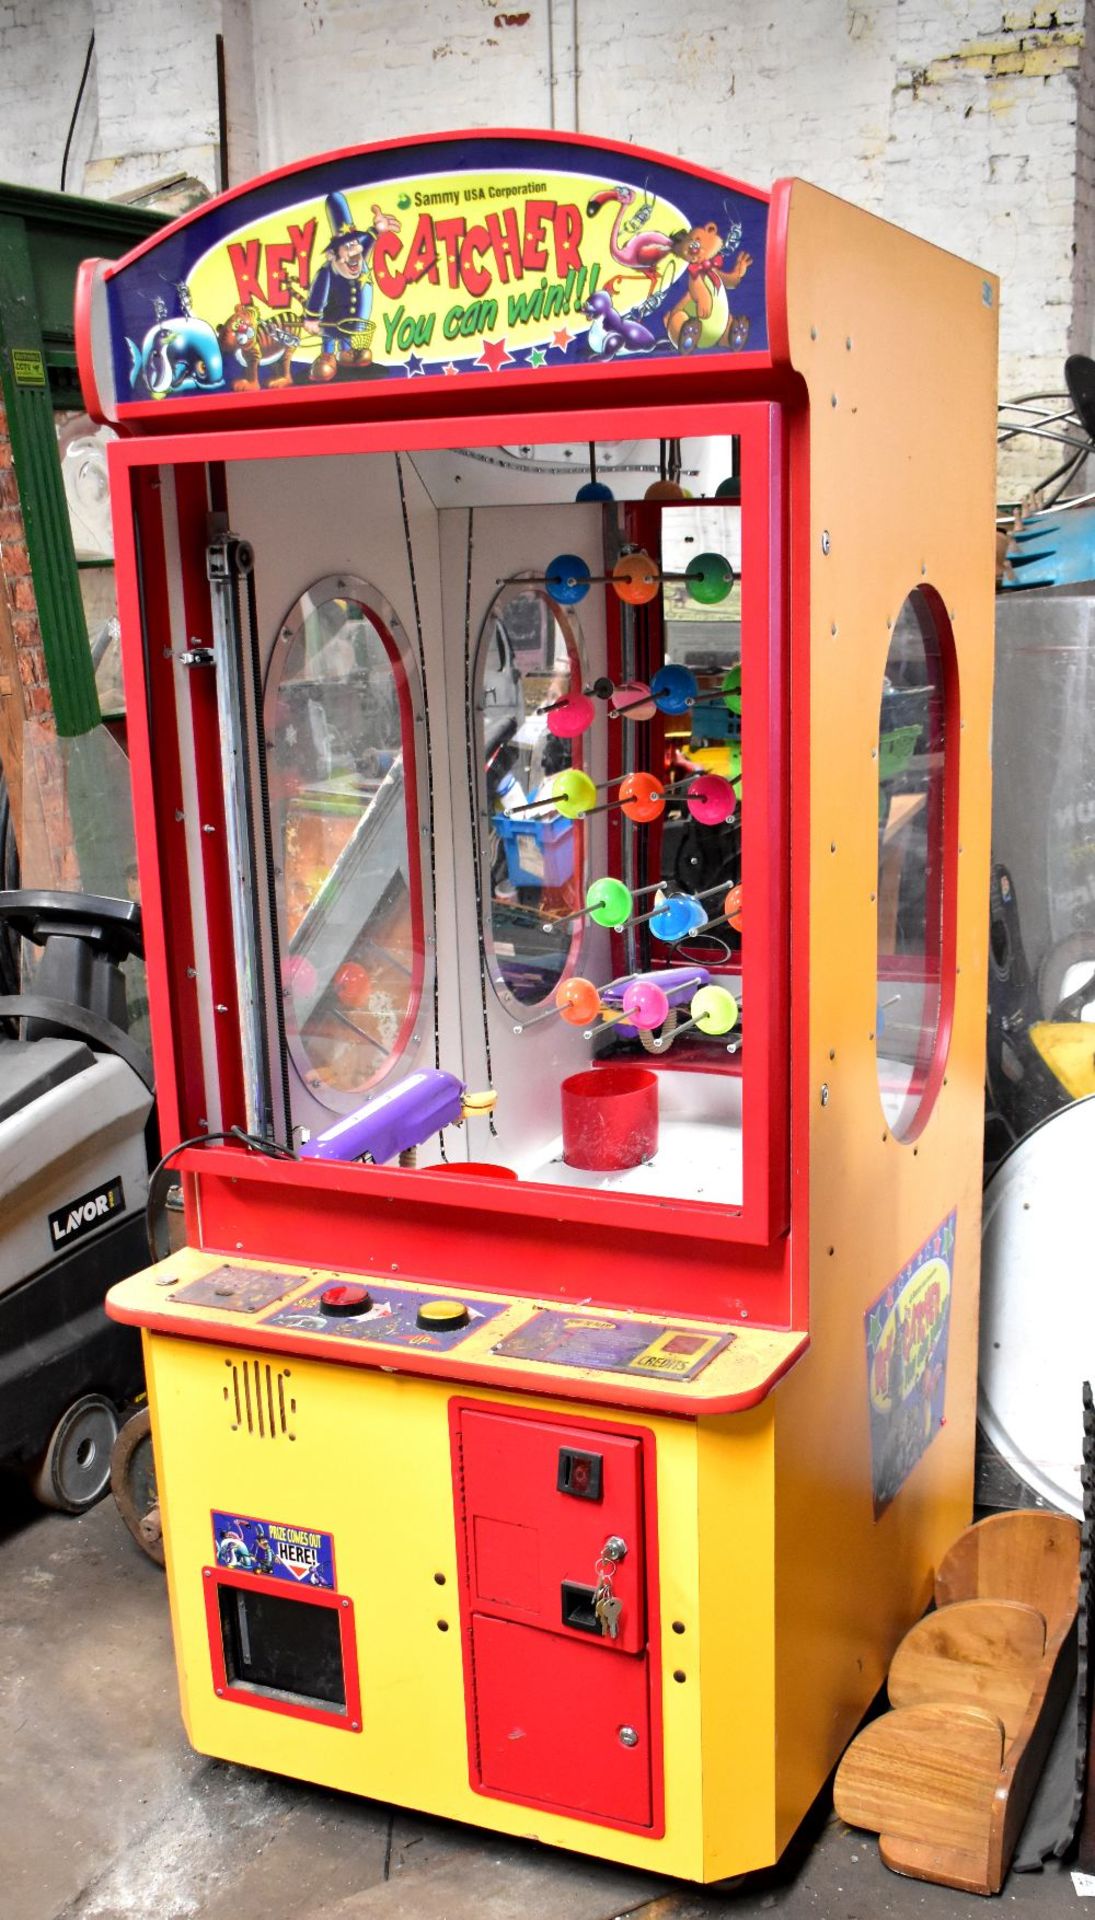 SAMMY USA CORPORATION; a Key Catcher arcade machine (af, sold electrically untested).